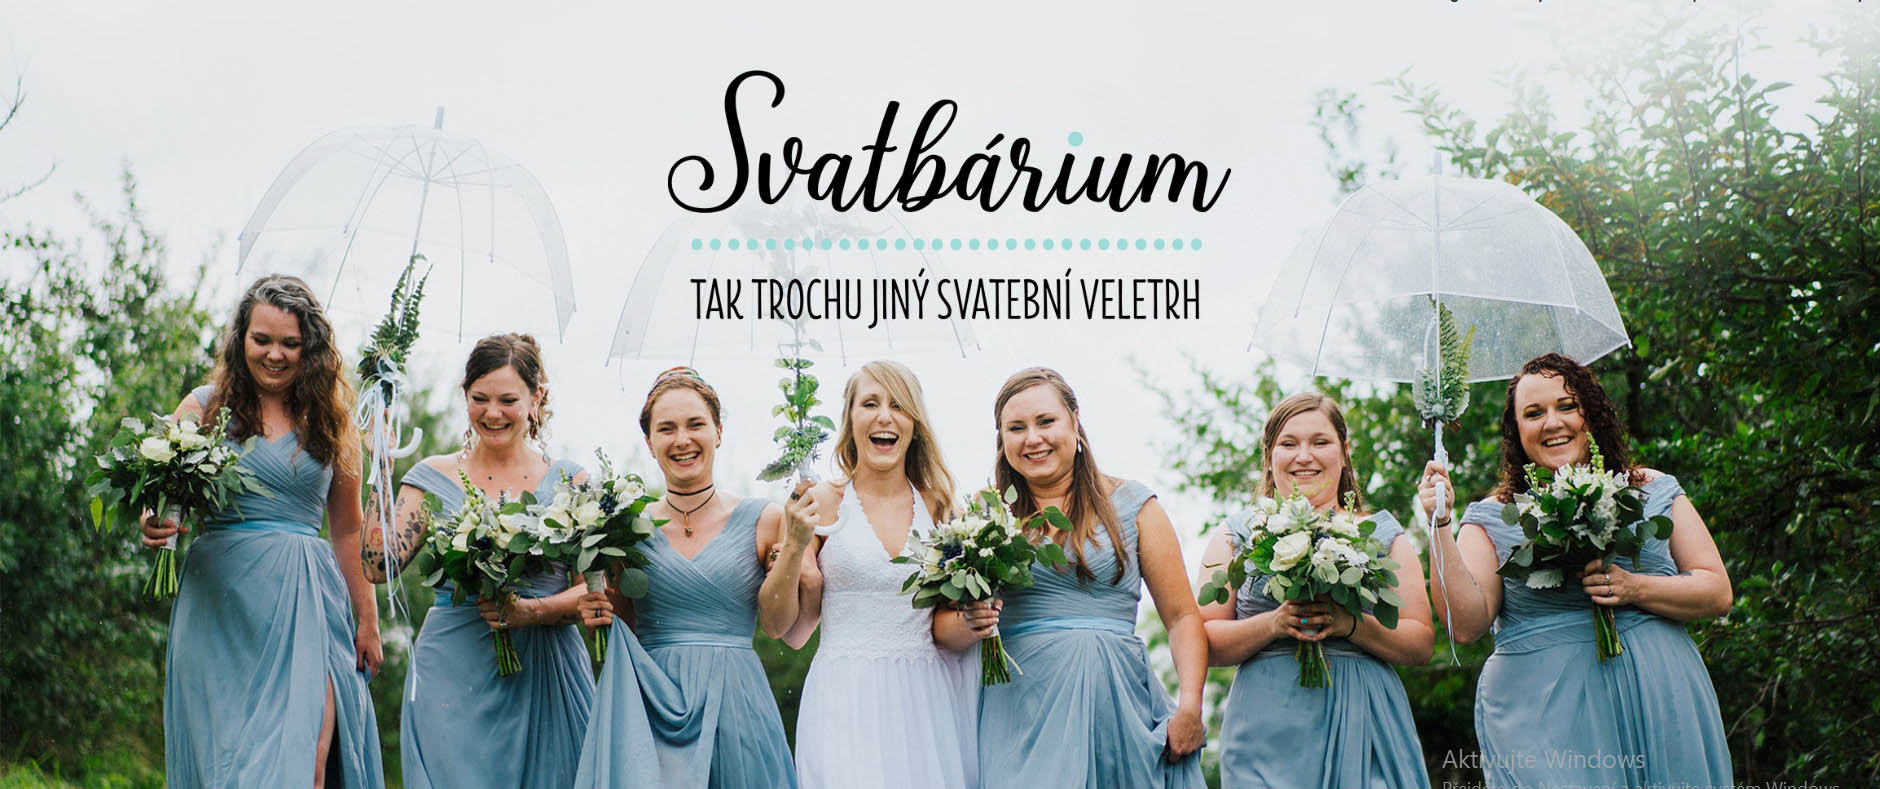 veletrh-svatbarium-svatebni-veletrh-2020-hradec-kralove